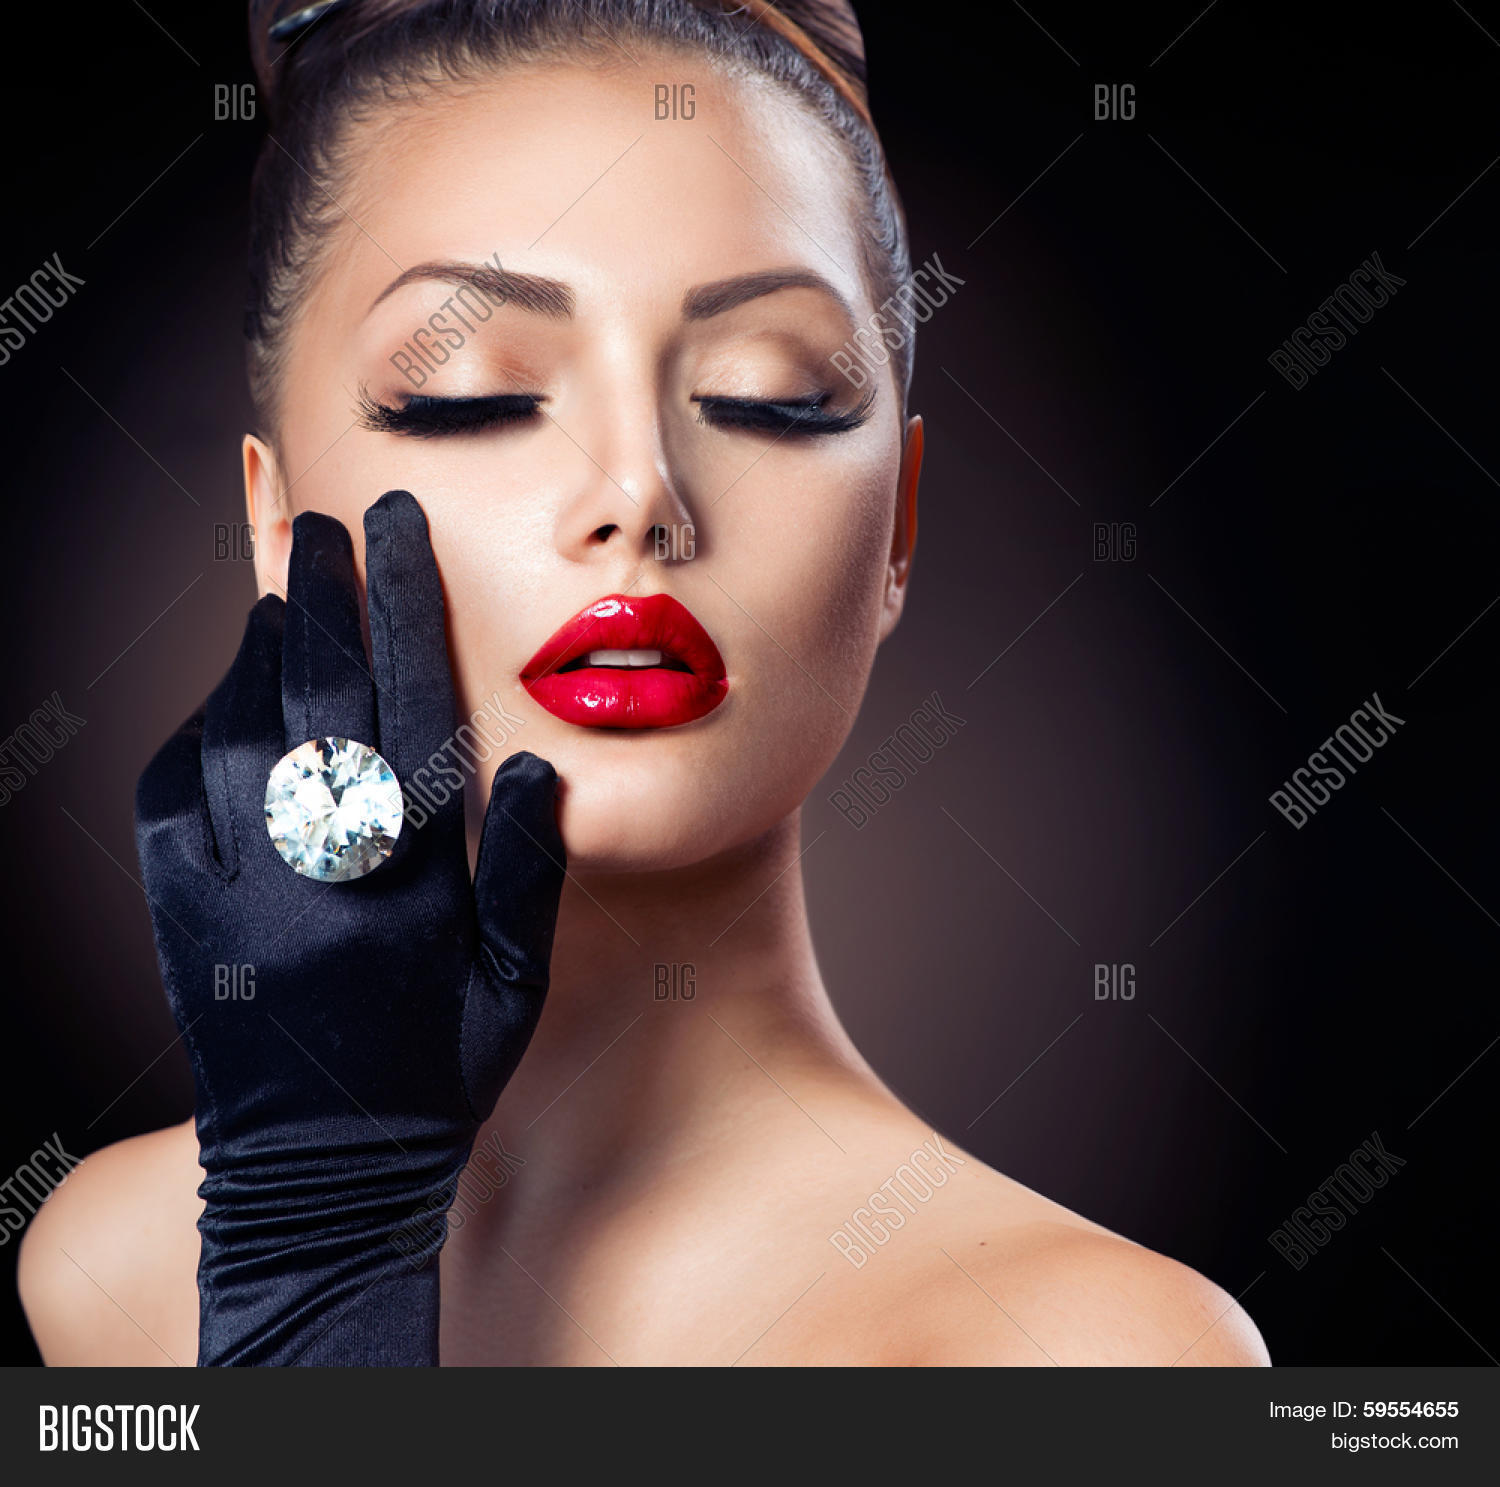 Beauty Fashion Glamour Girl Image & Photo | Bigstock